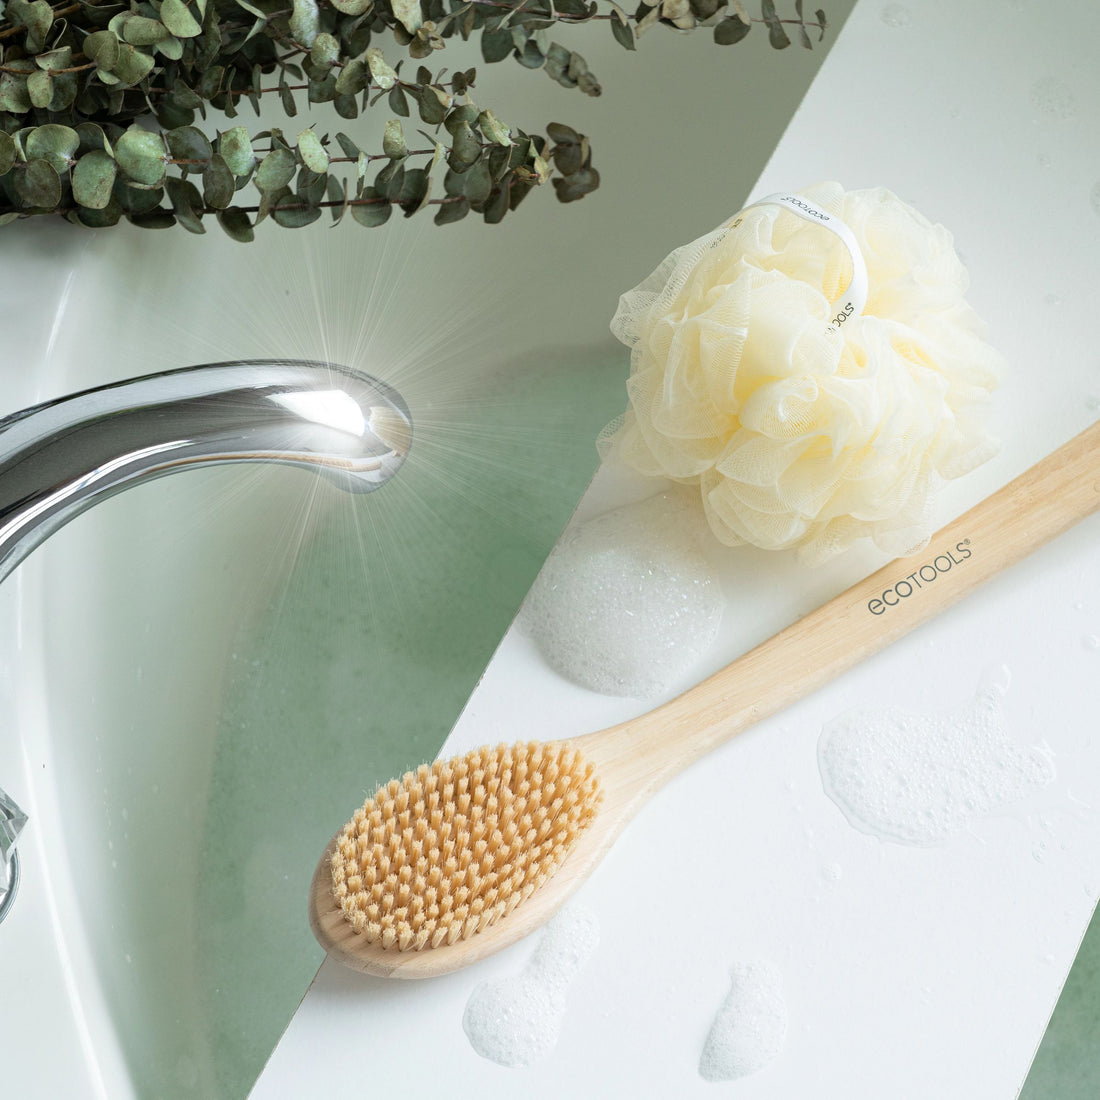 Deep Cleansing & Exfoliating Facial Brush - EcoTools